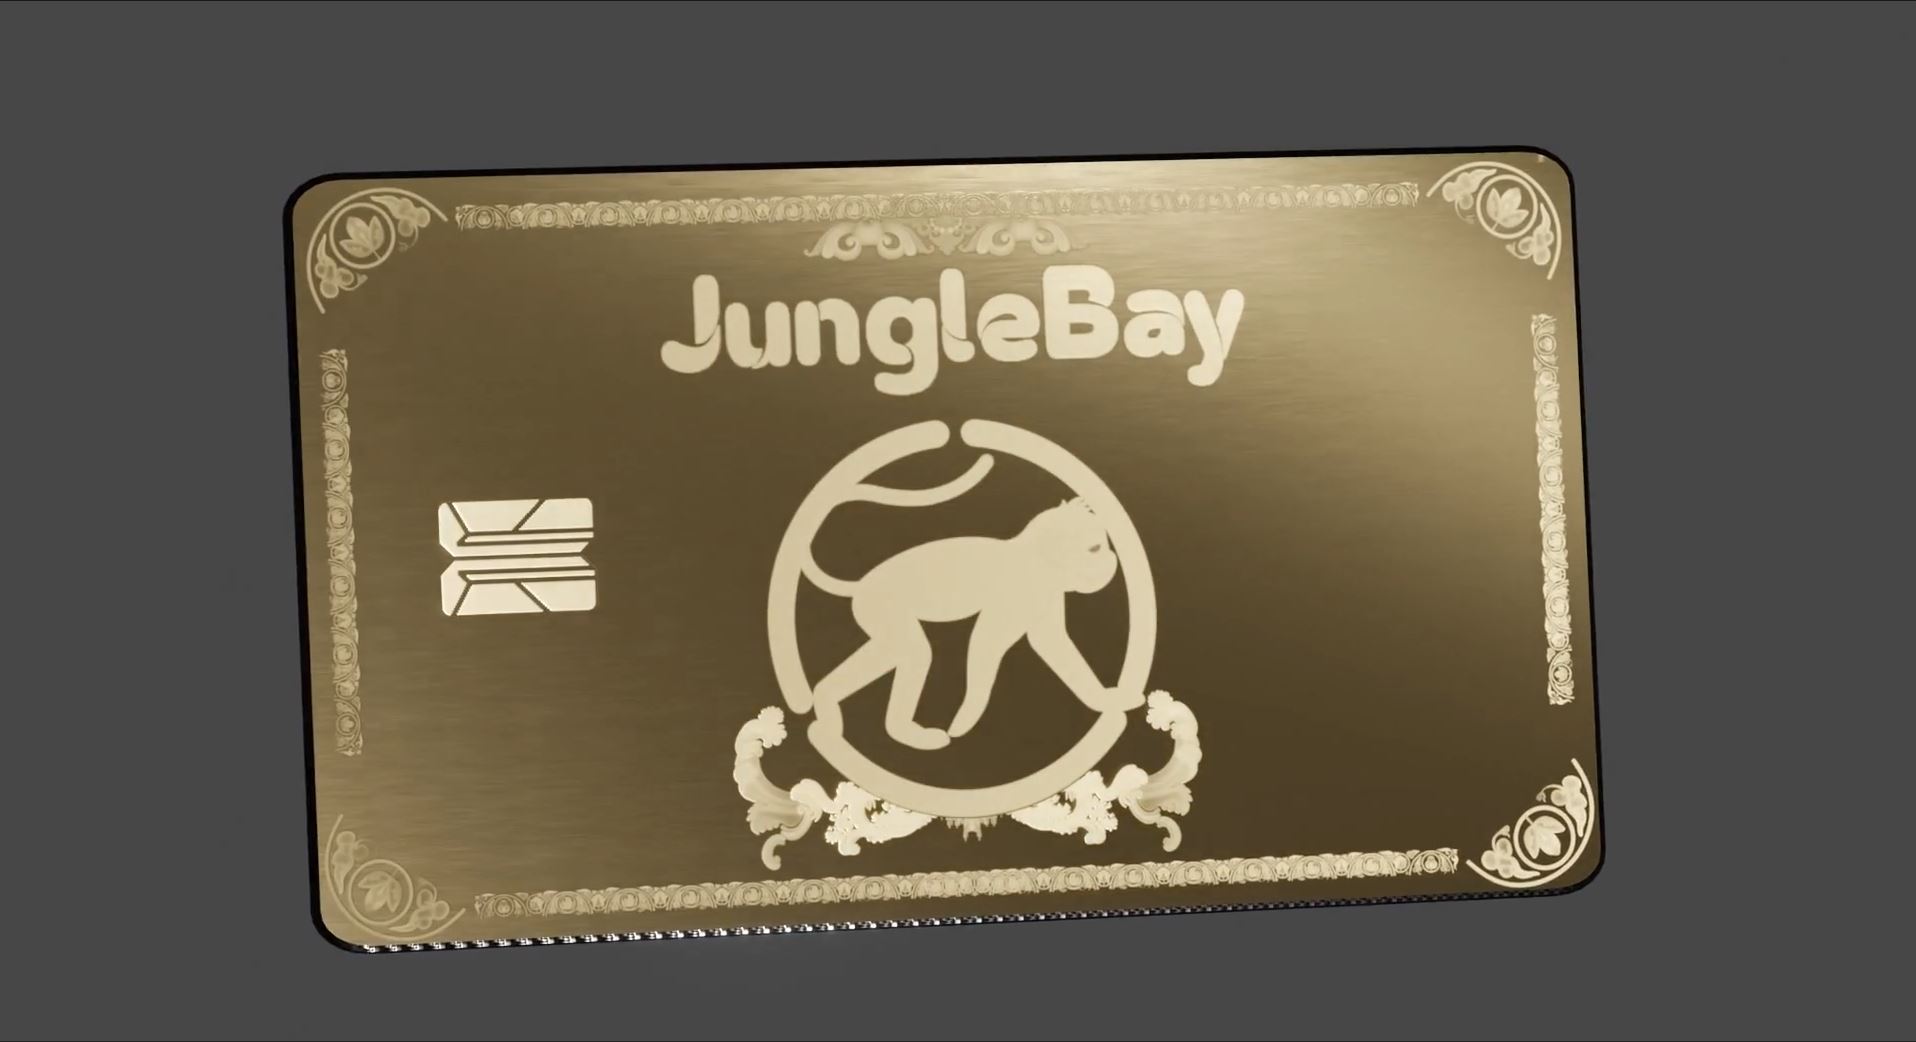 JungleBay Gold Card #101